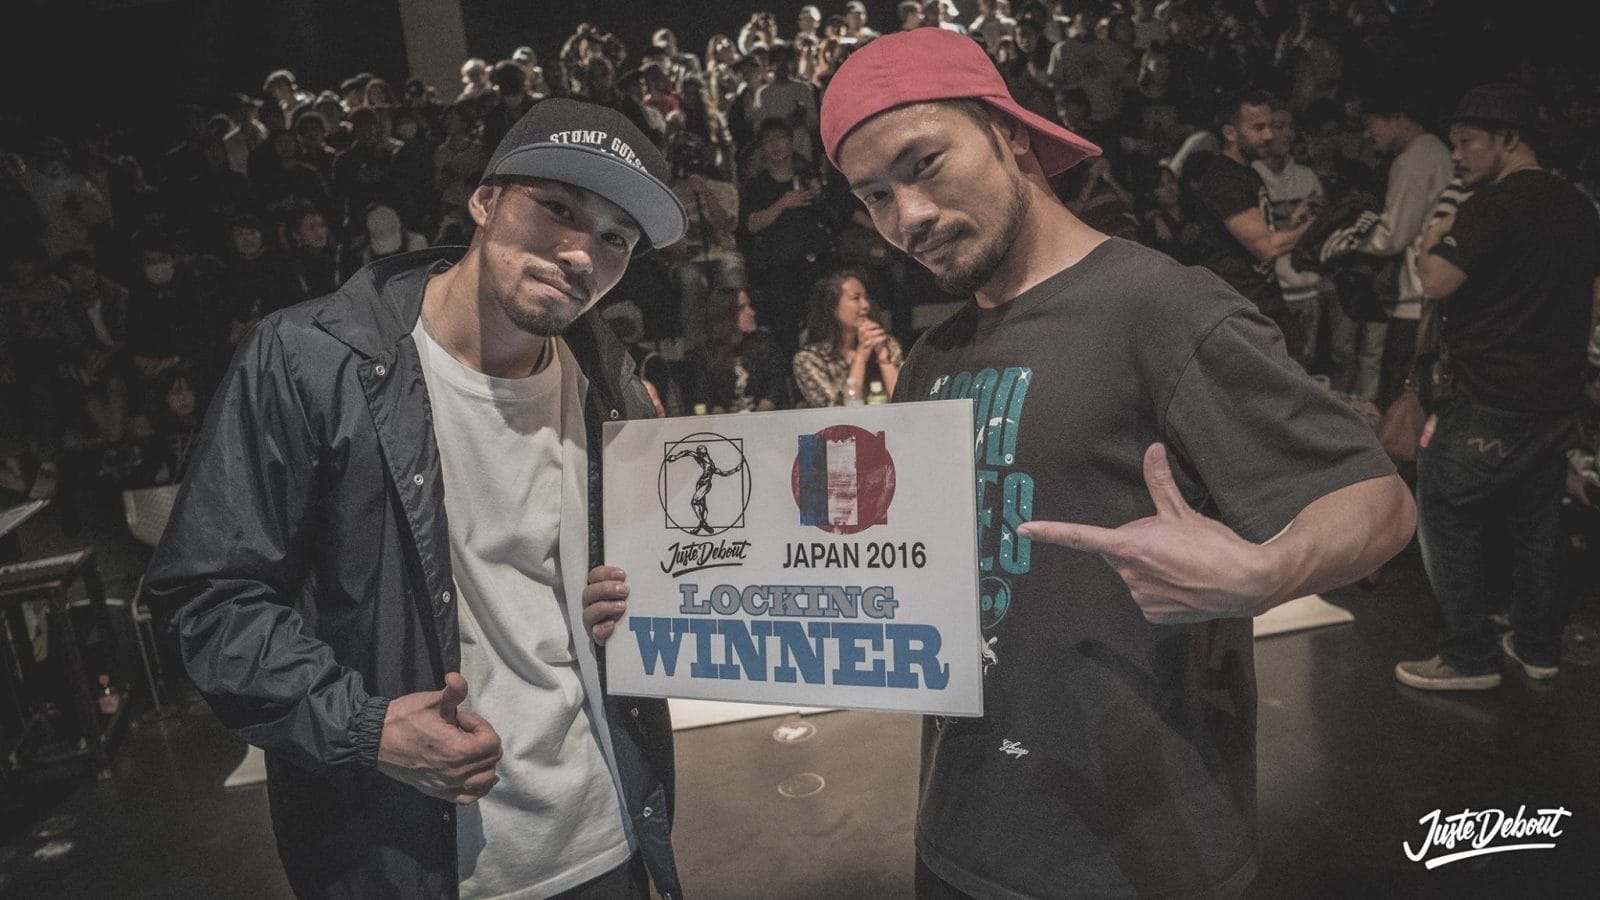 Finaliste Gagnant en Locking au Japon